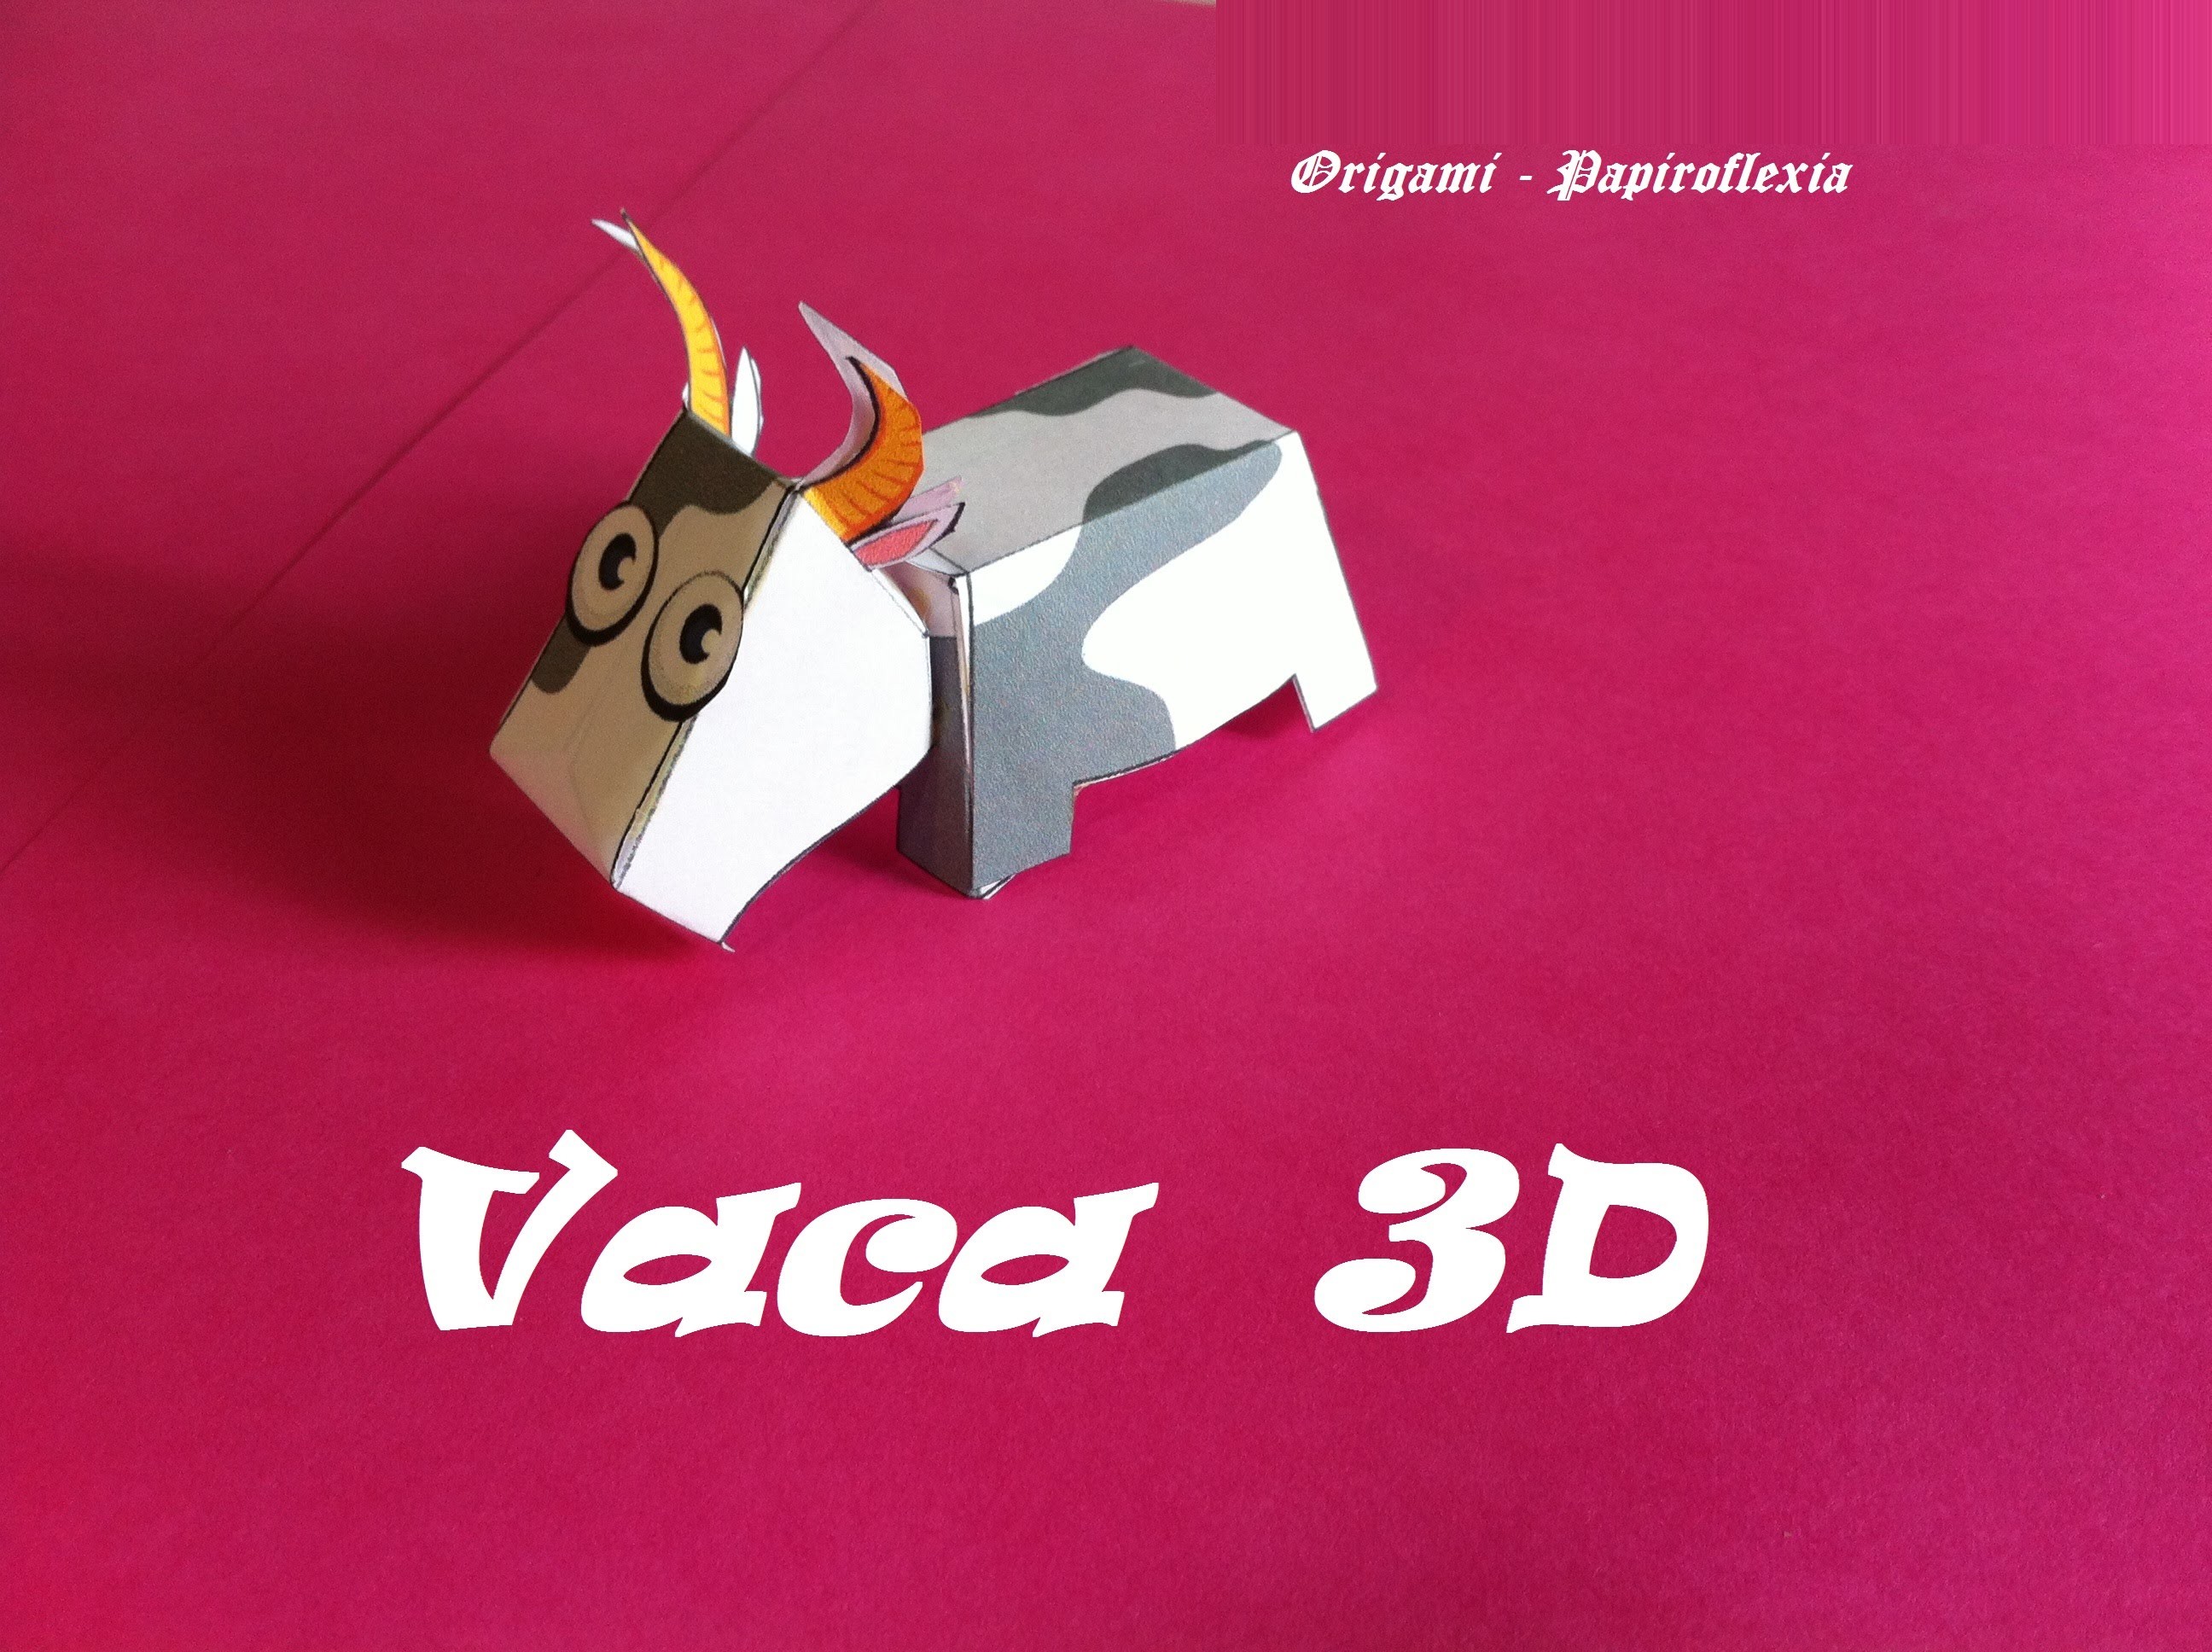 Paper Toys. Origami - Papiroflexia. Vaca 3D